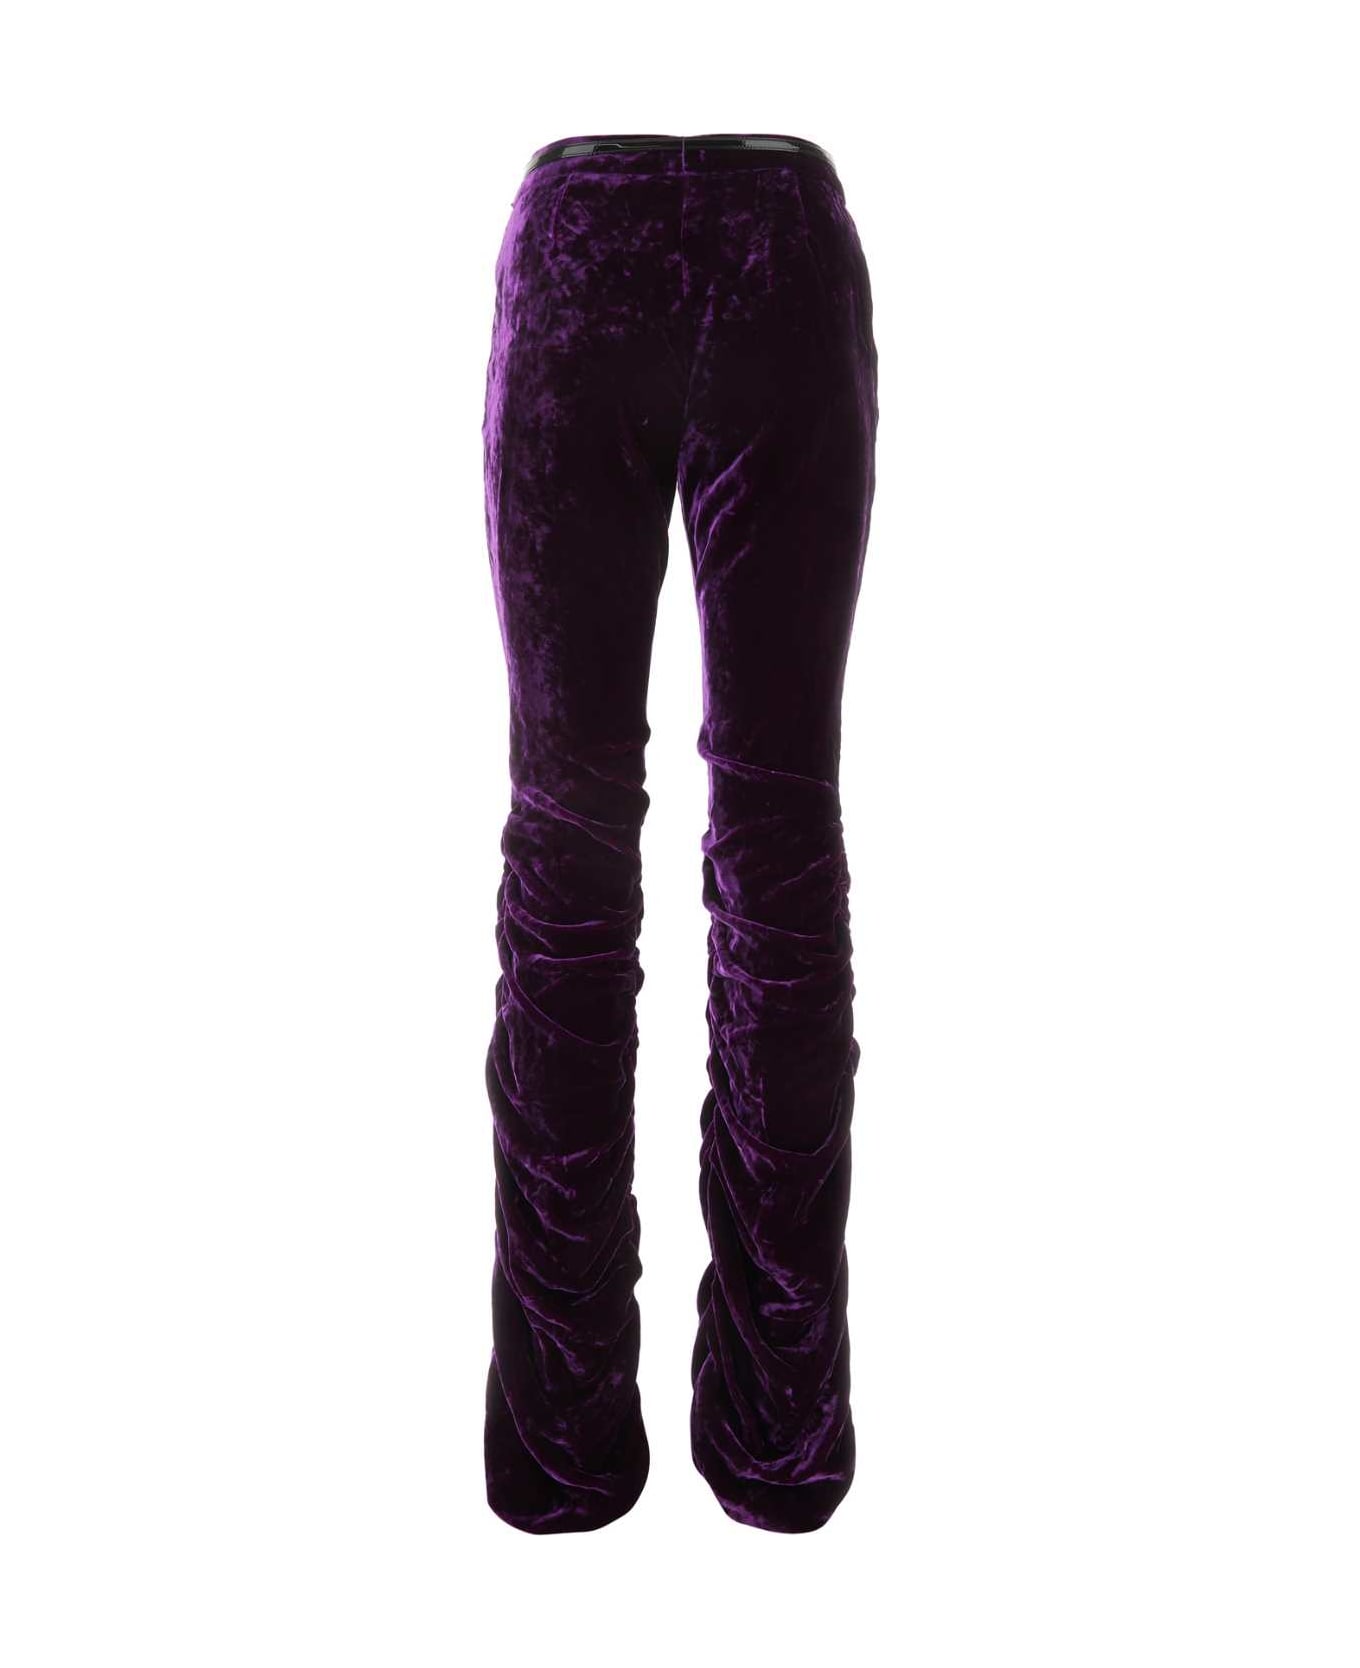 Gucci Purple Velvet Pant - 5976 ボトムス